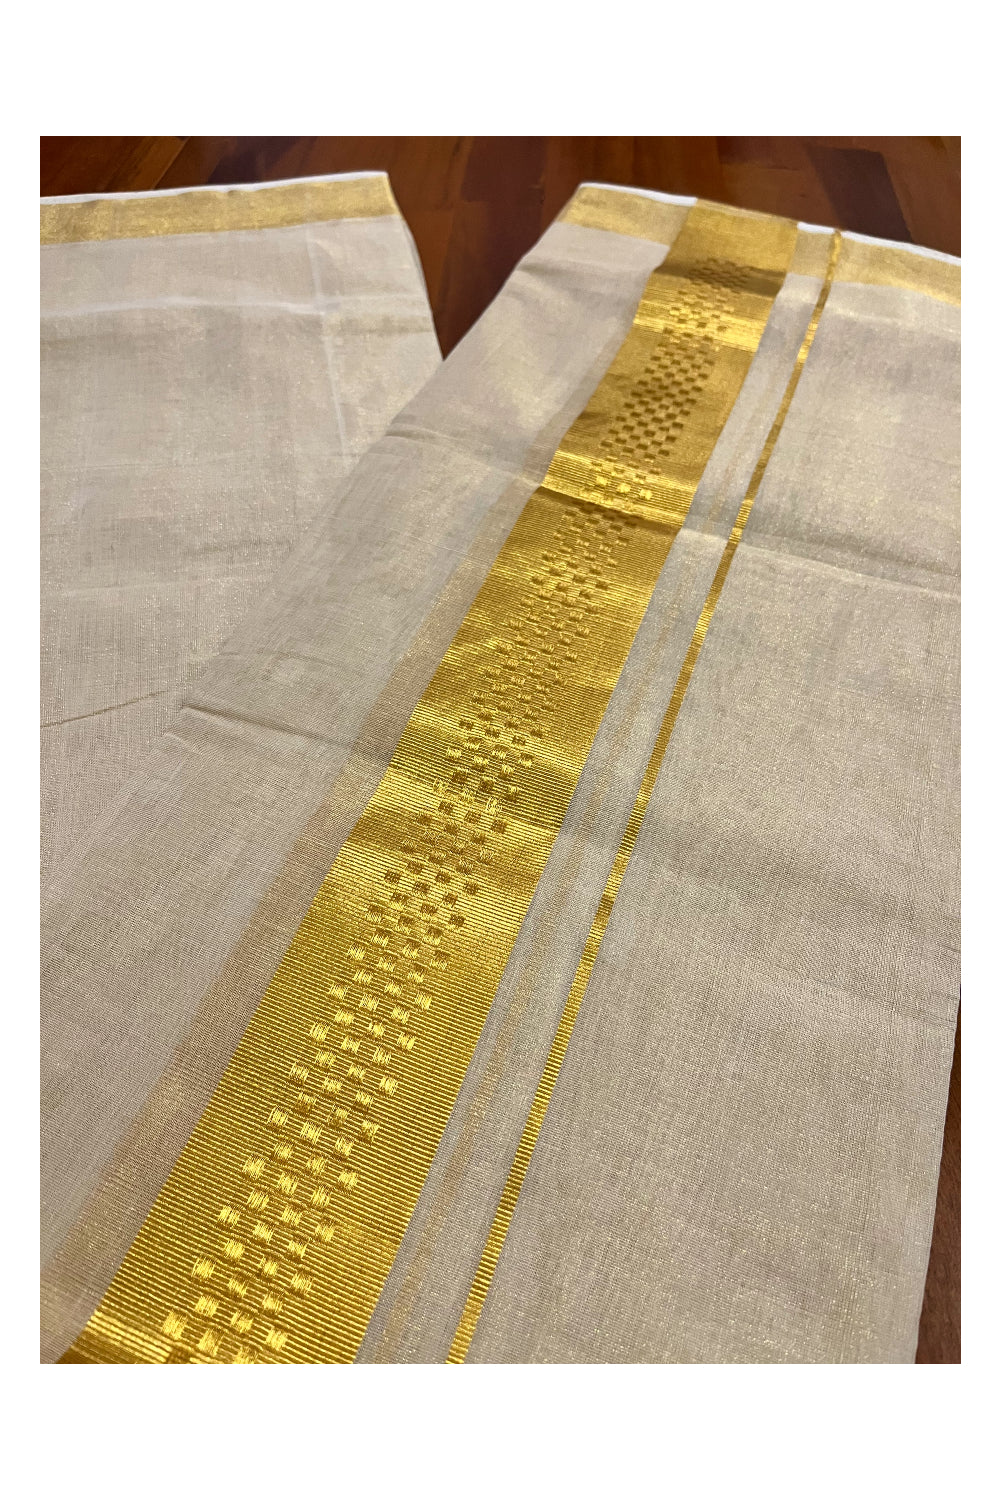 Southloom Premium Wedding Handloom Tissue Mundu with Kasavu Paa Neythu Border (South Indian Kerala Dhoti)